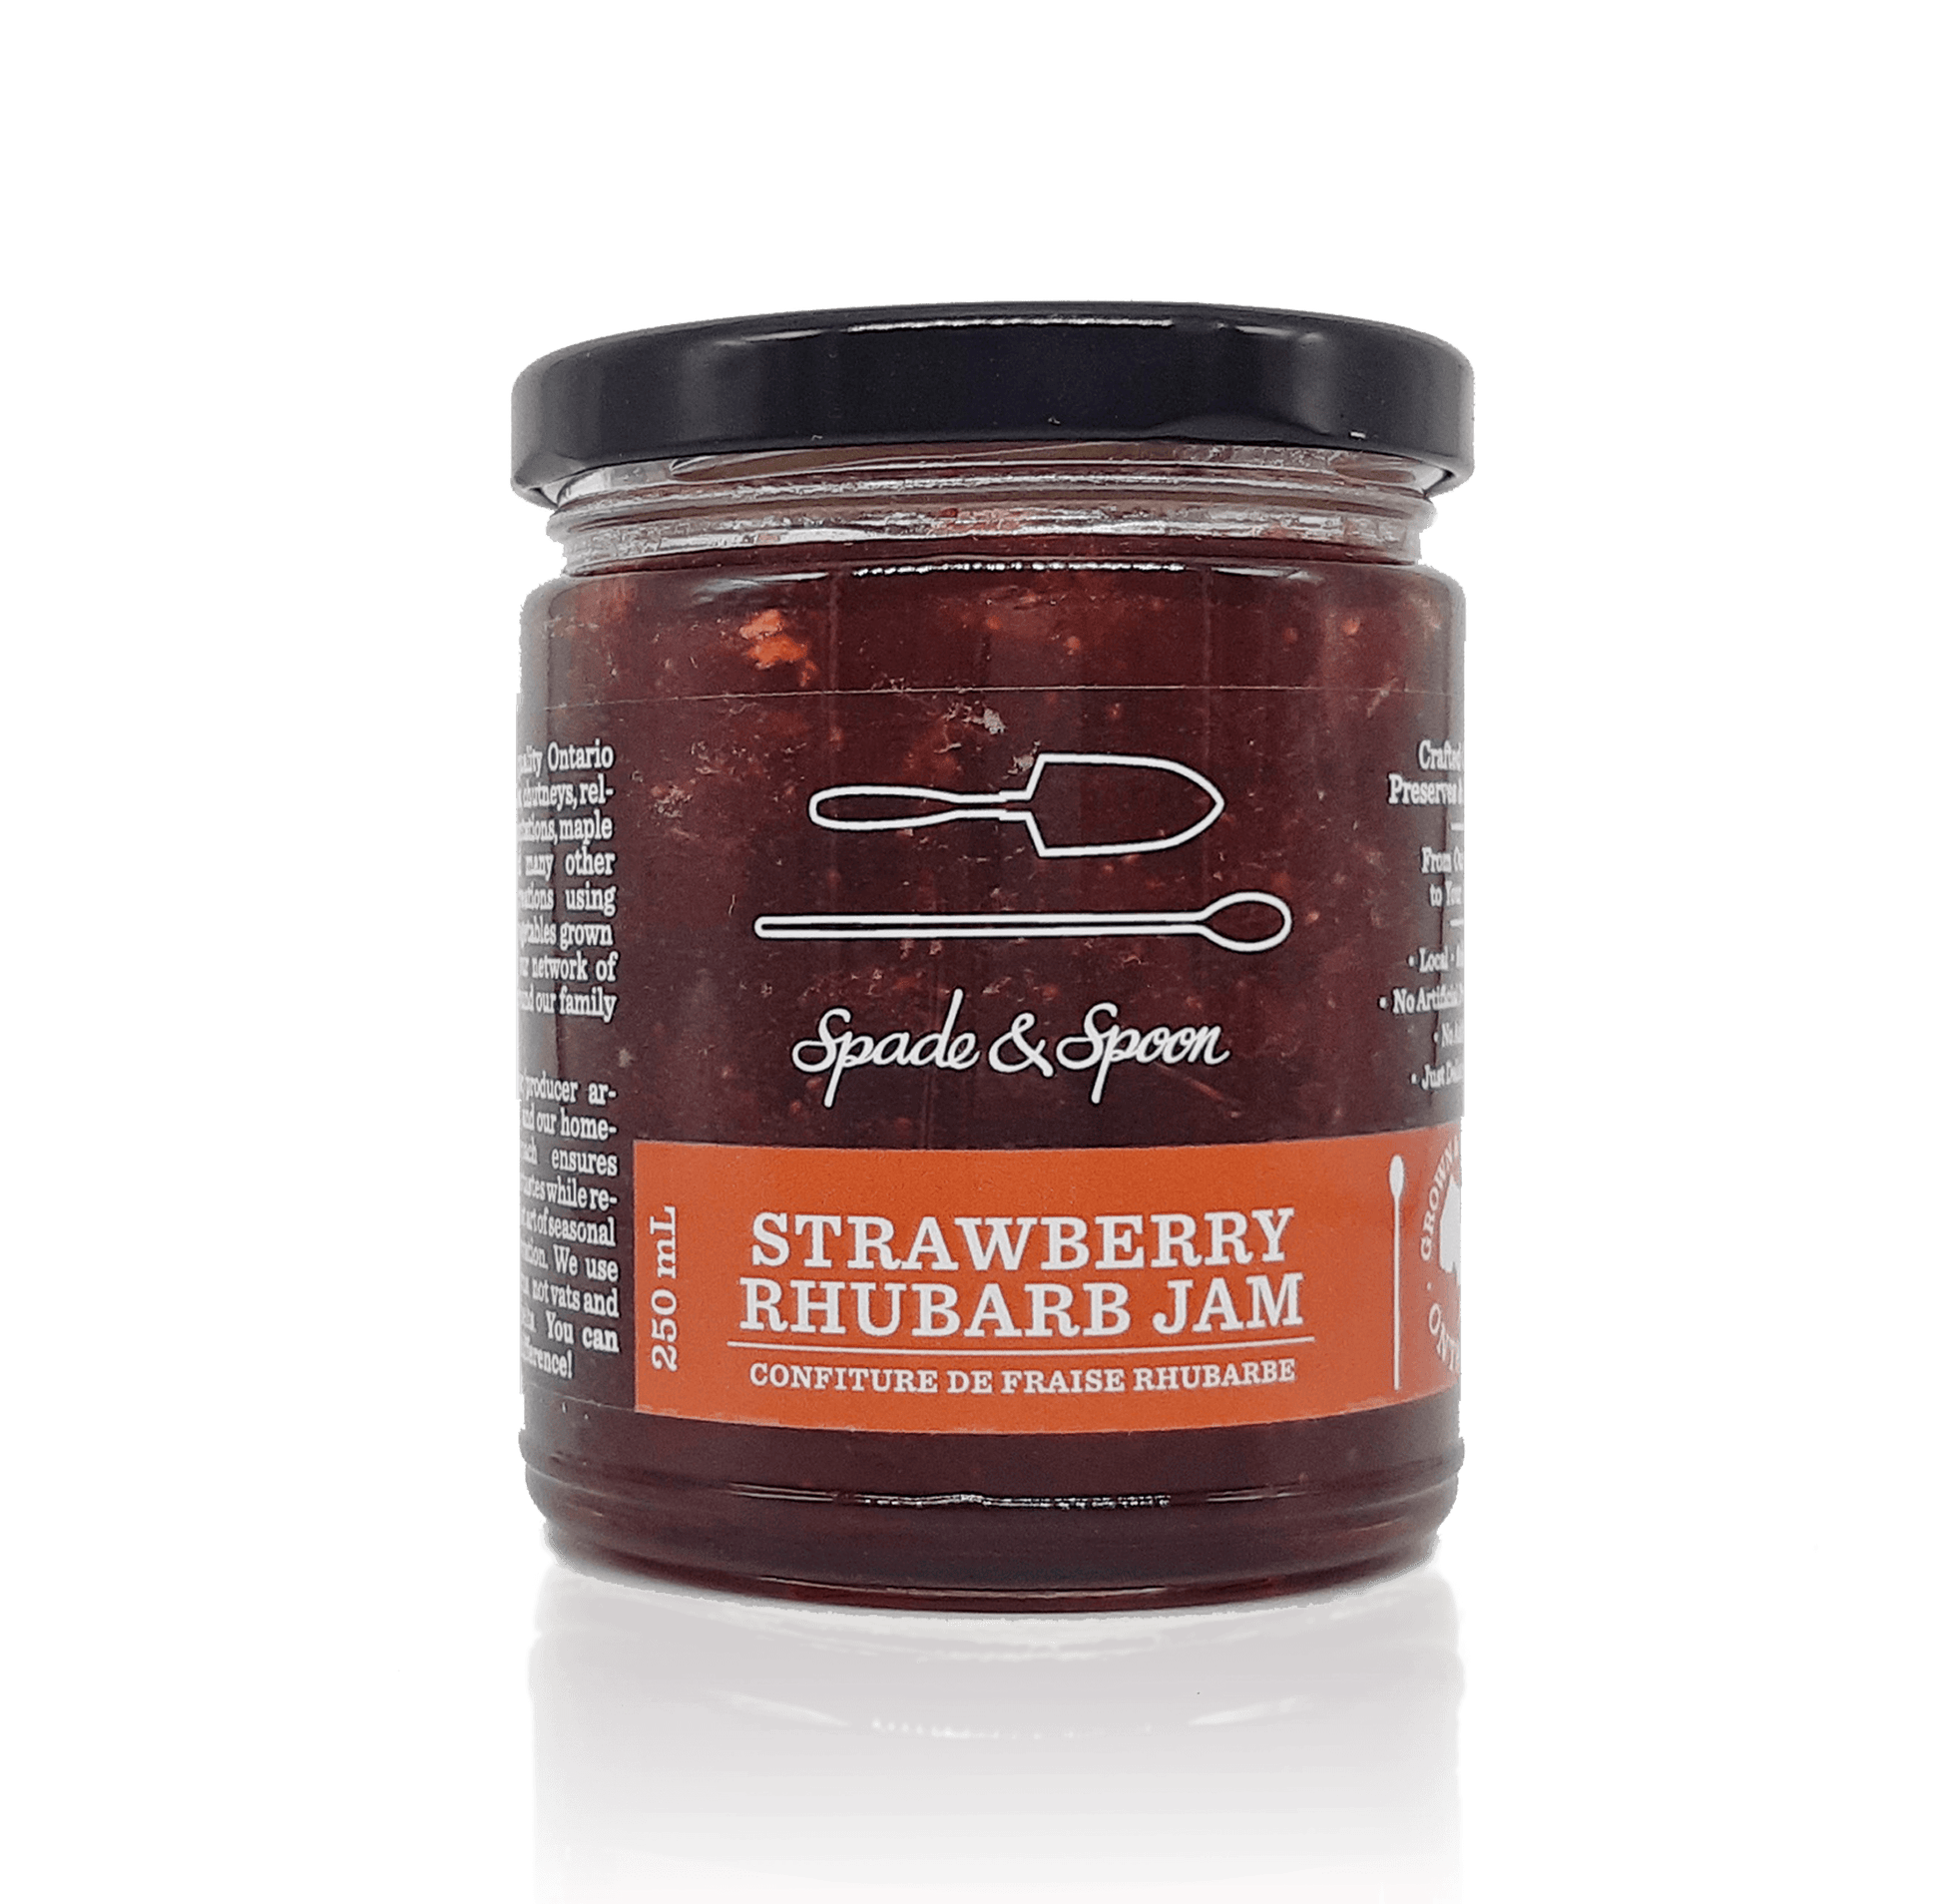 Strawberry Rhubarb Jam - Spade & Spoon - Ontario Farm Goods